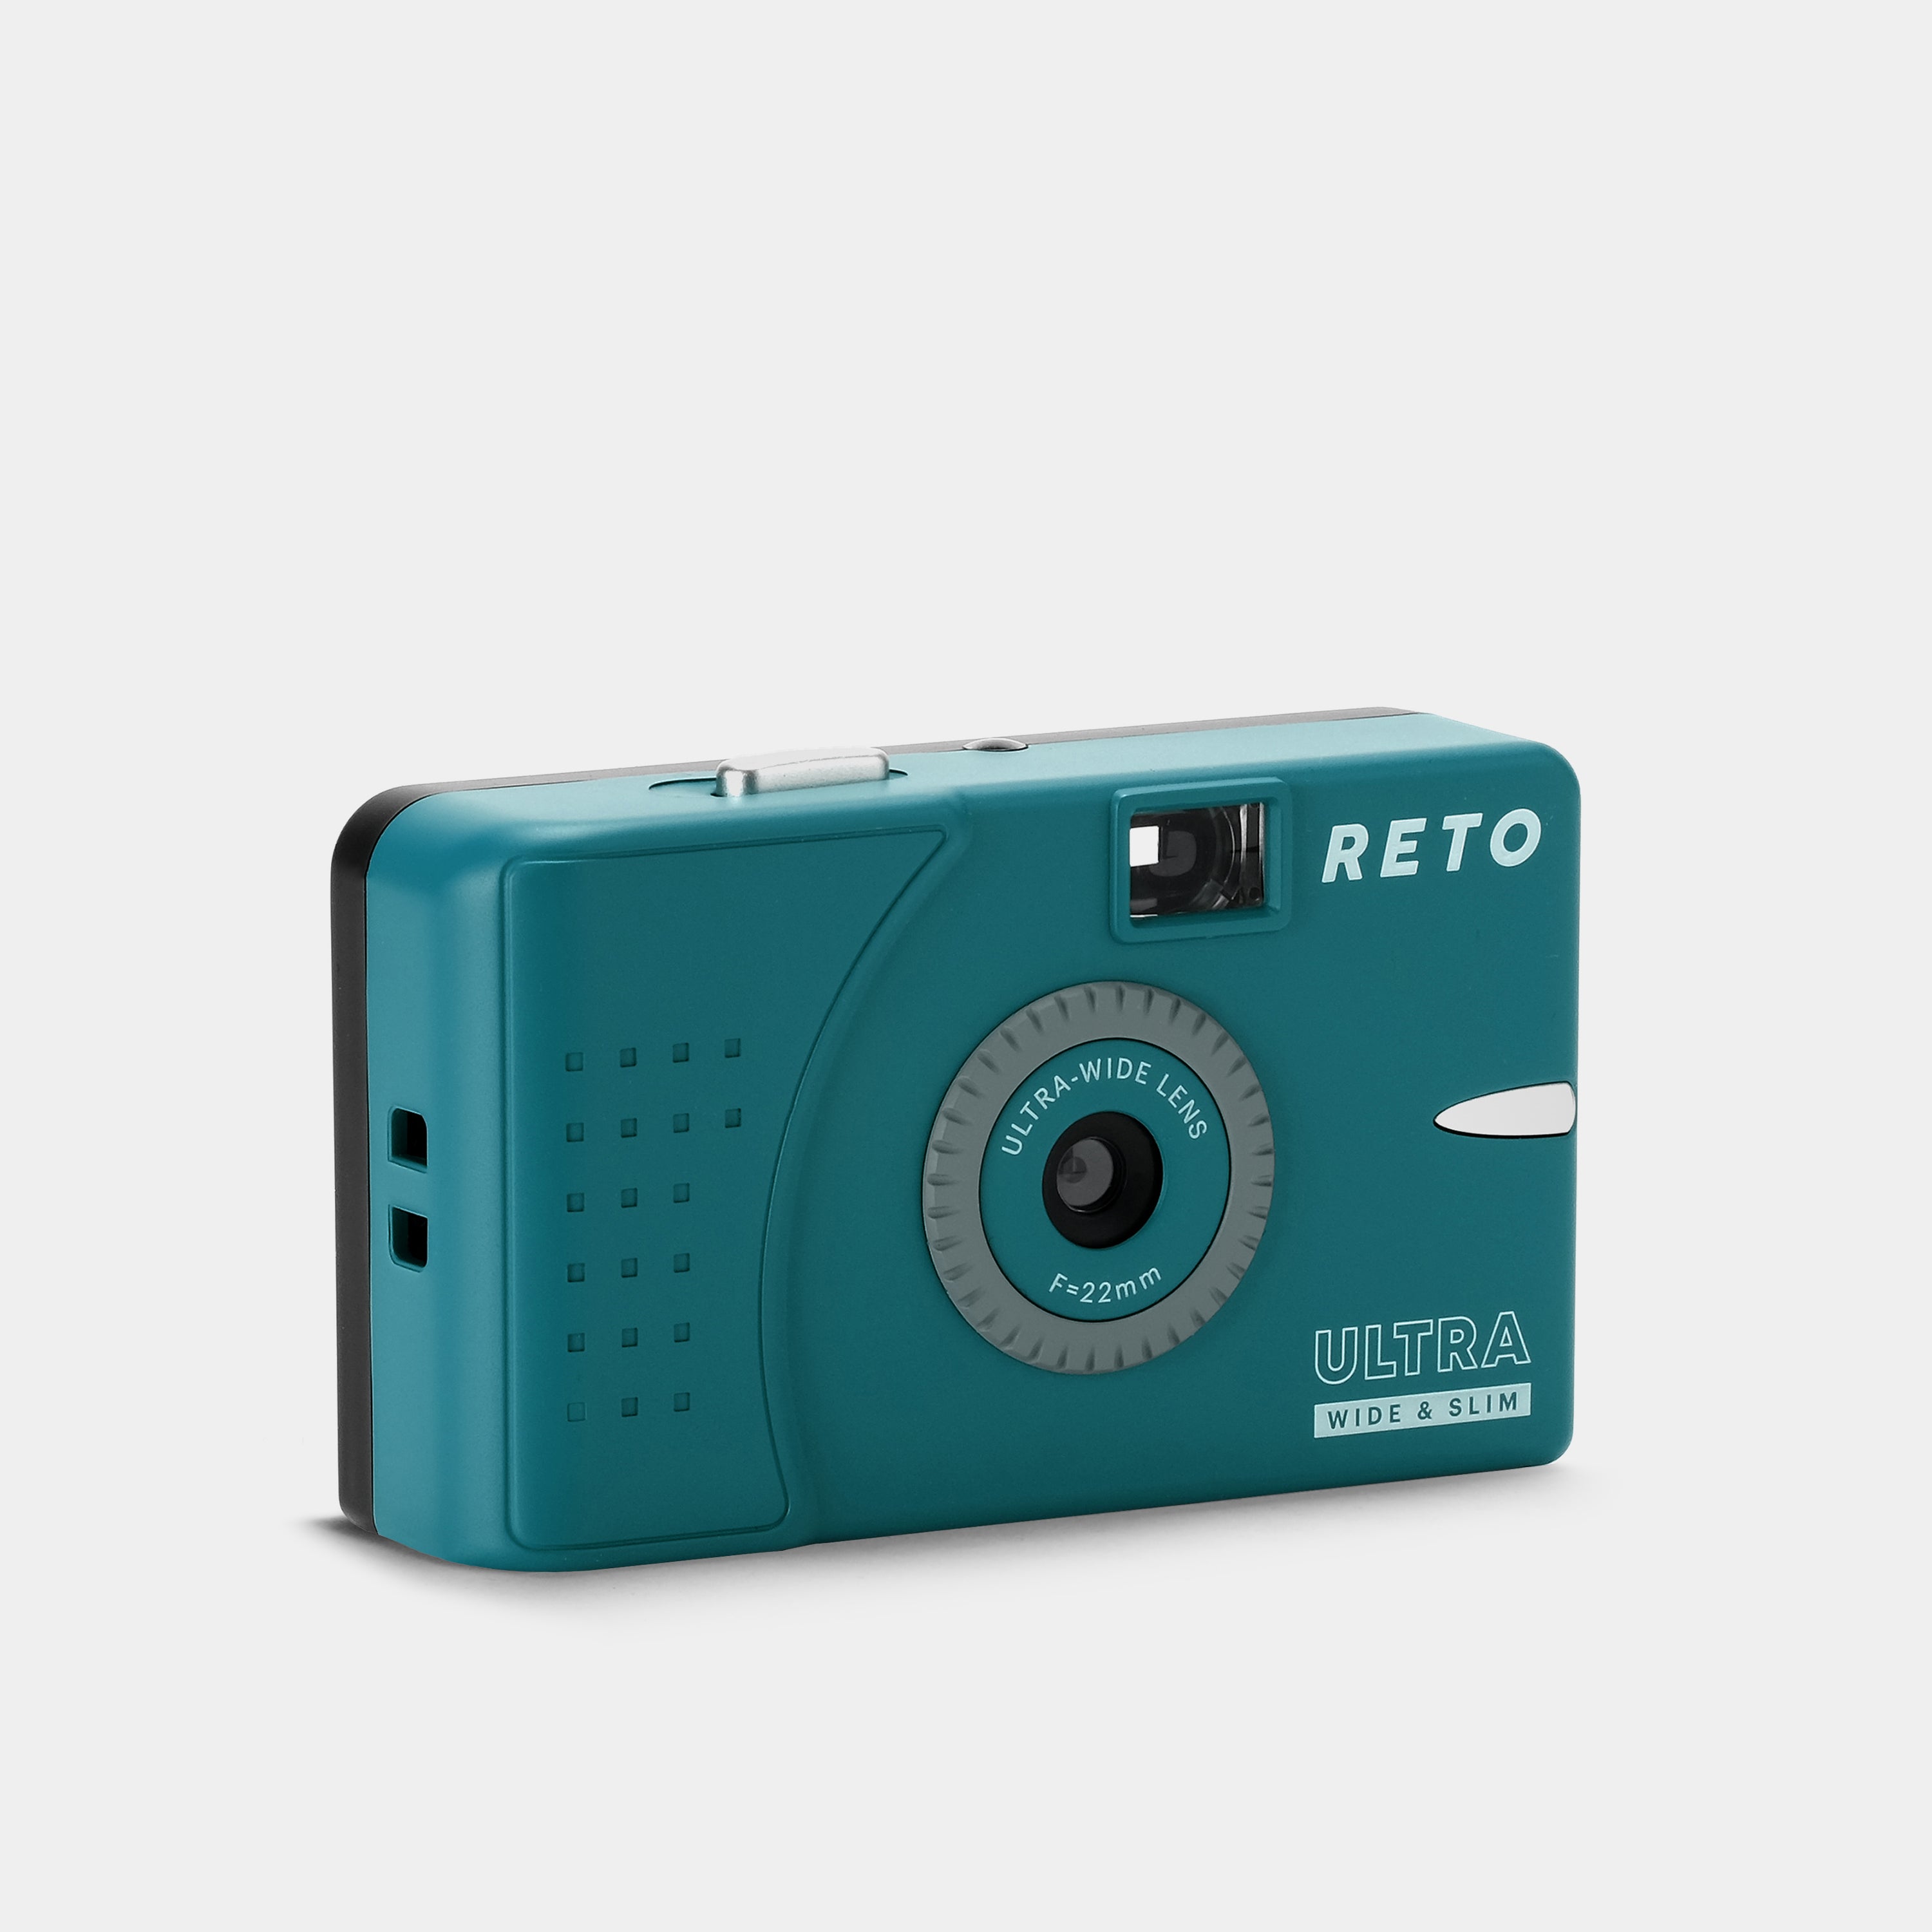 RETO Ultra Wide & Slim Murky Blue 35mm Film Camera